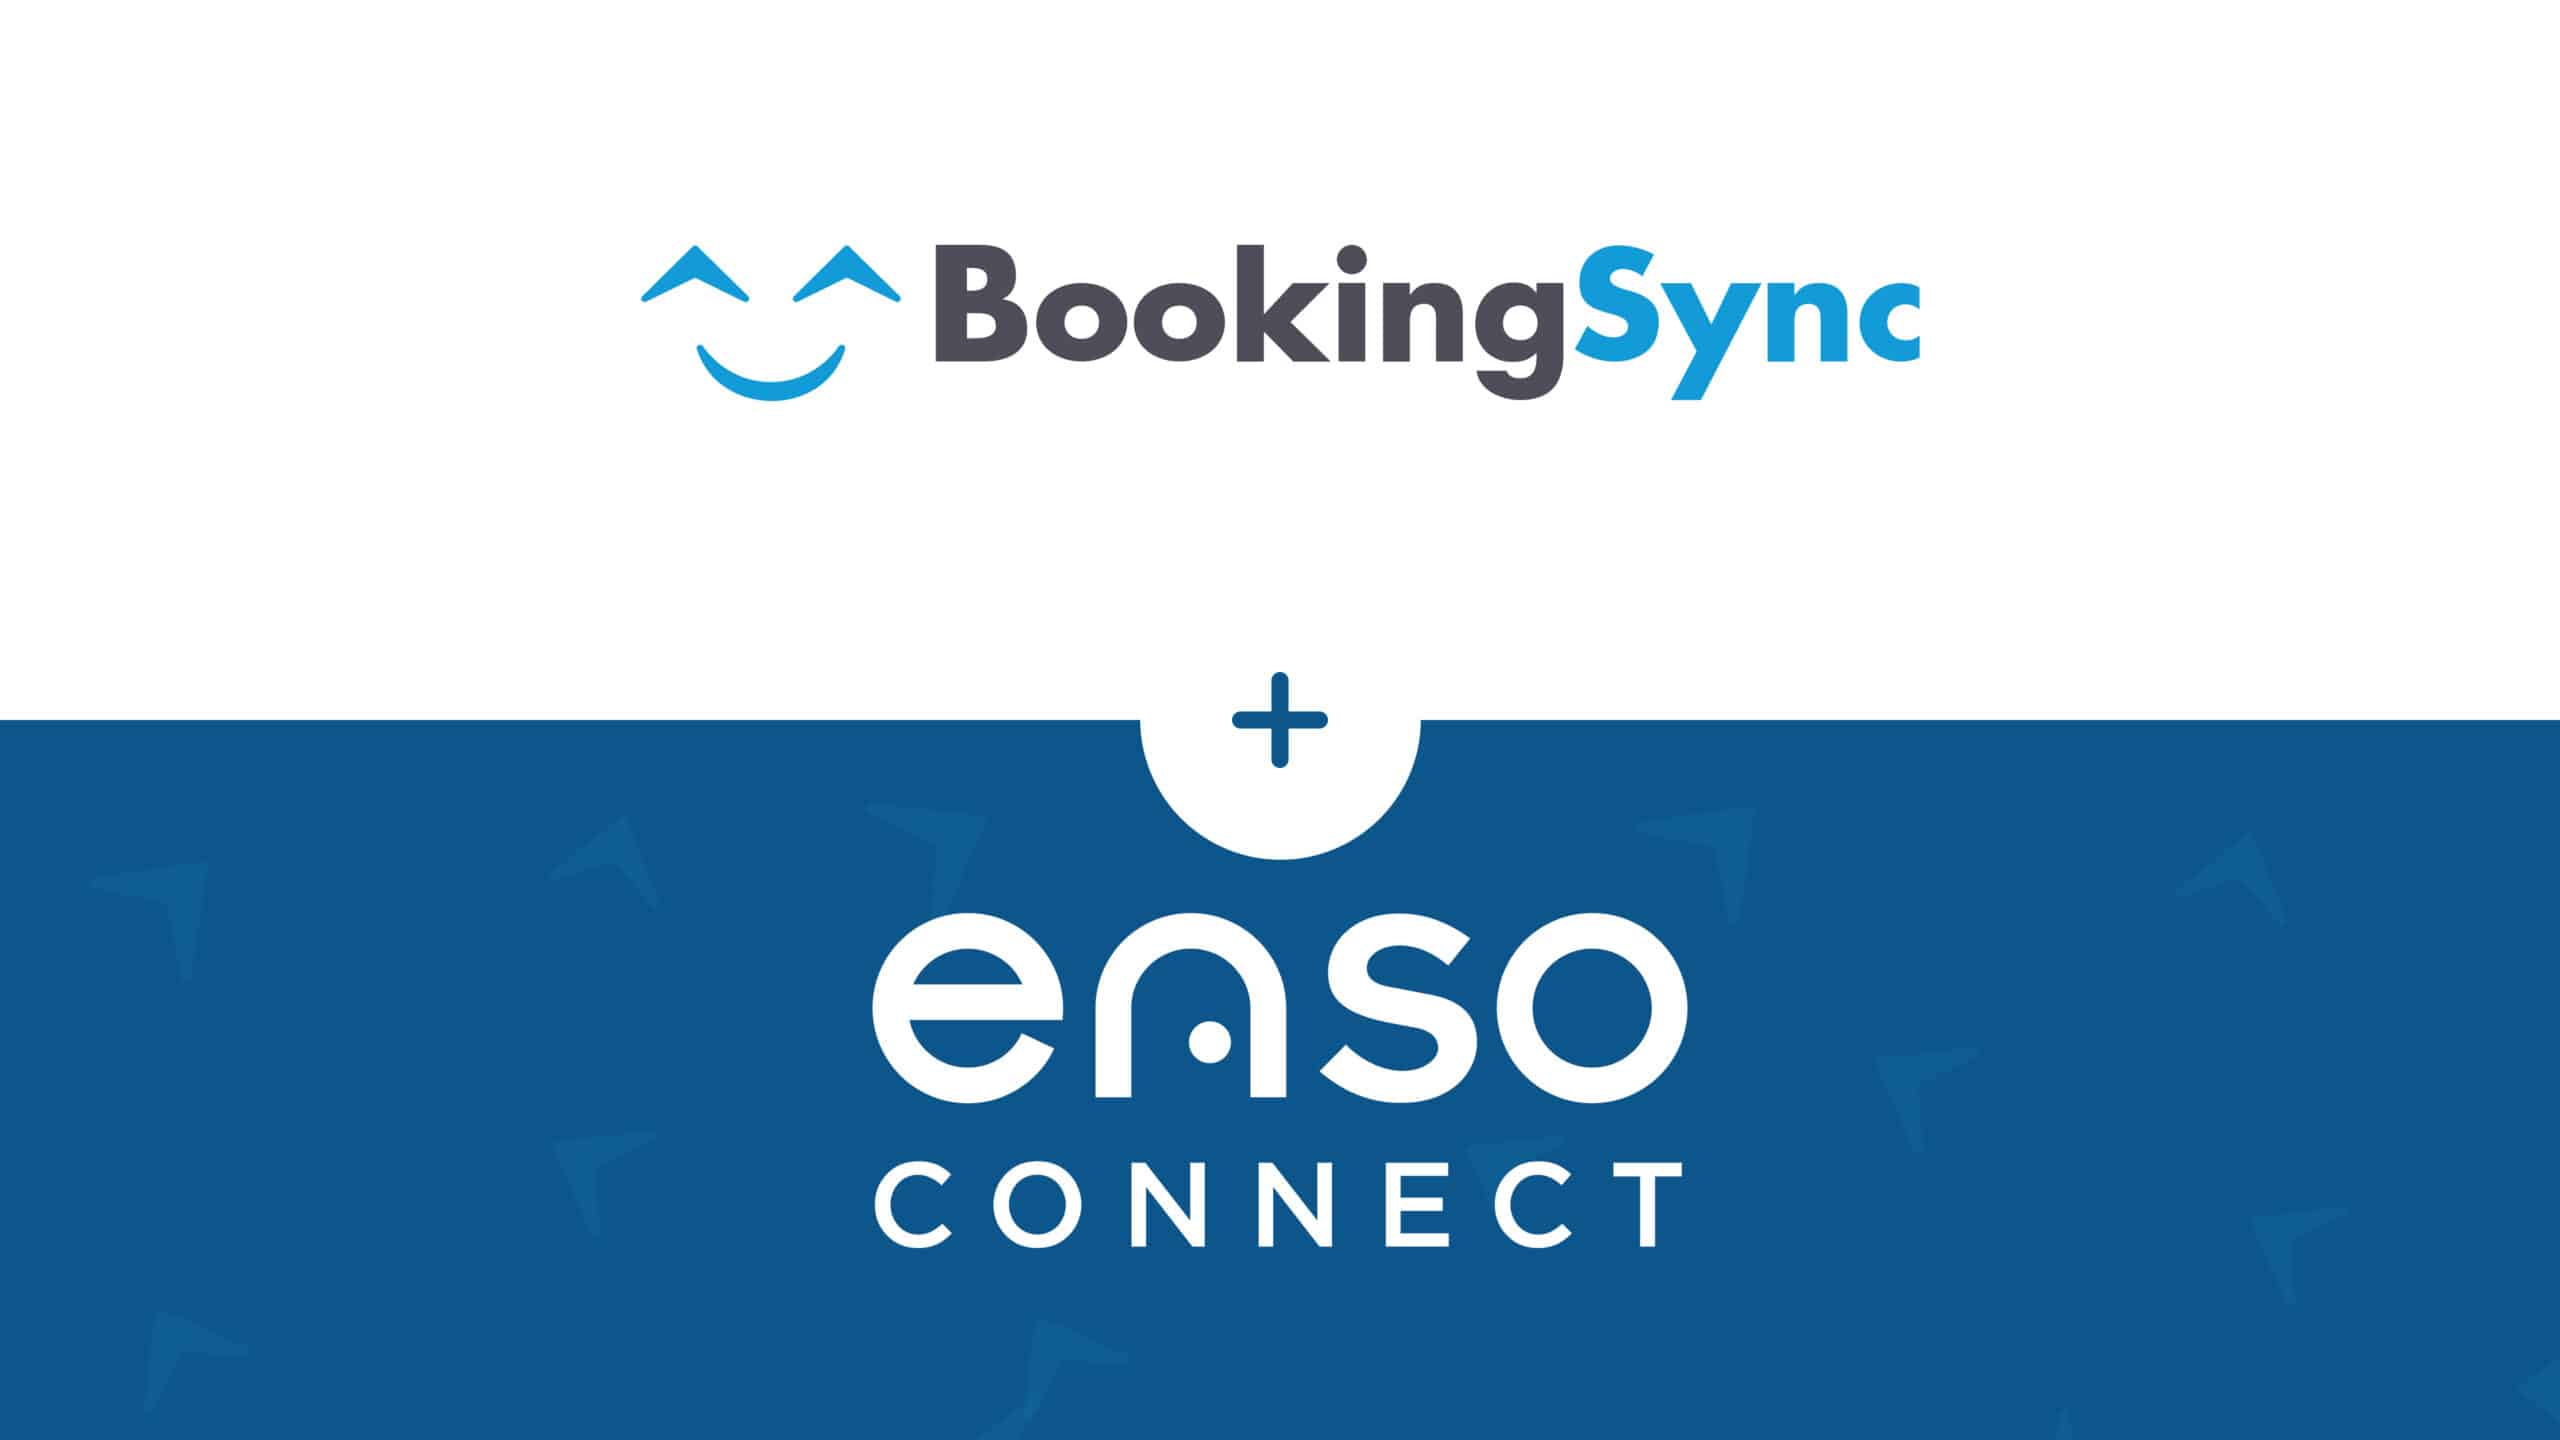 BookingSync partnership announcement